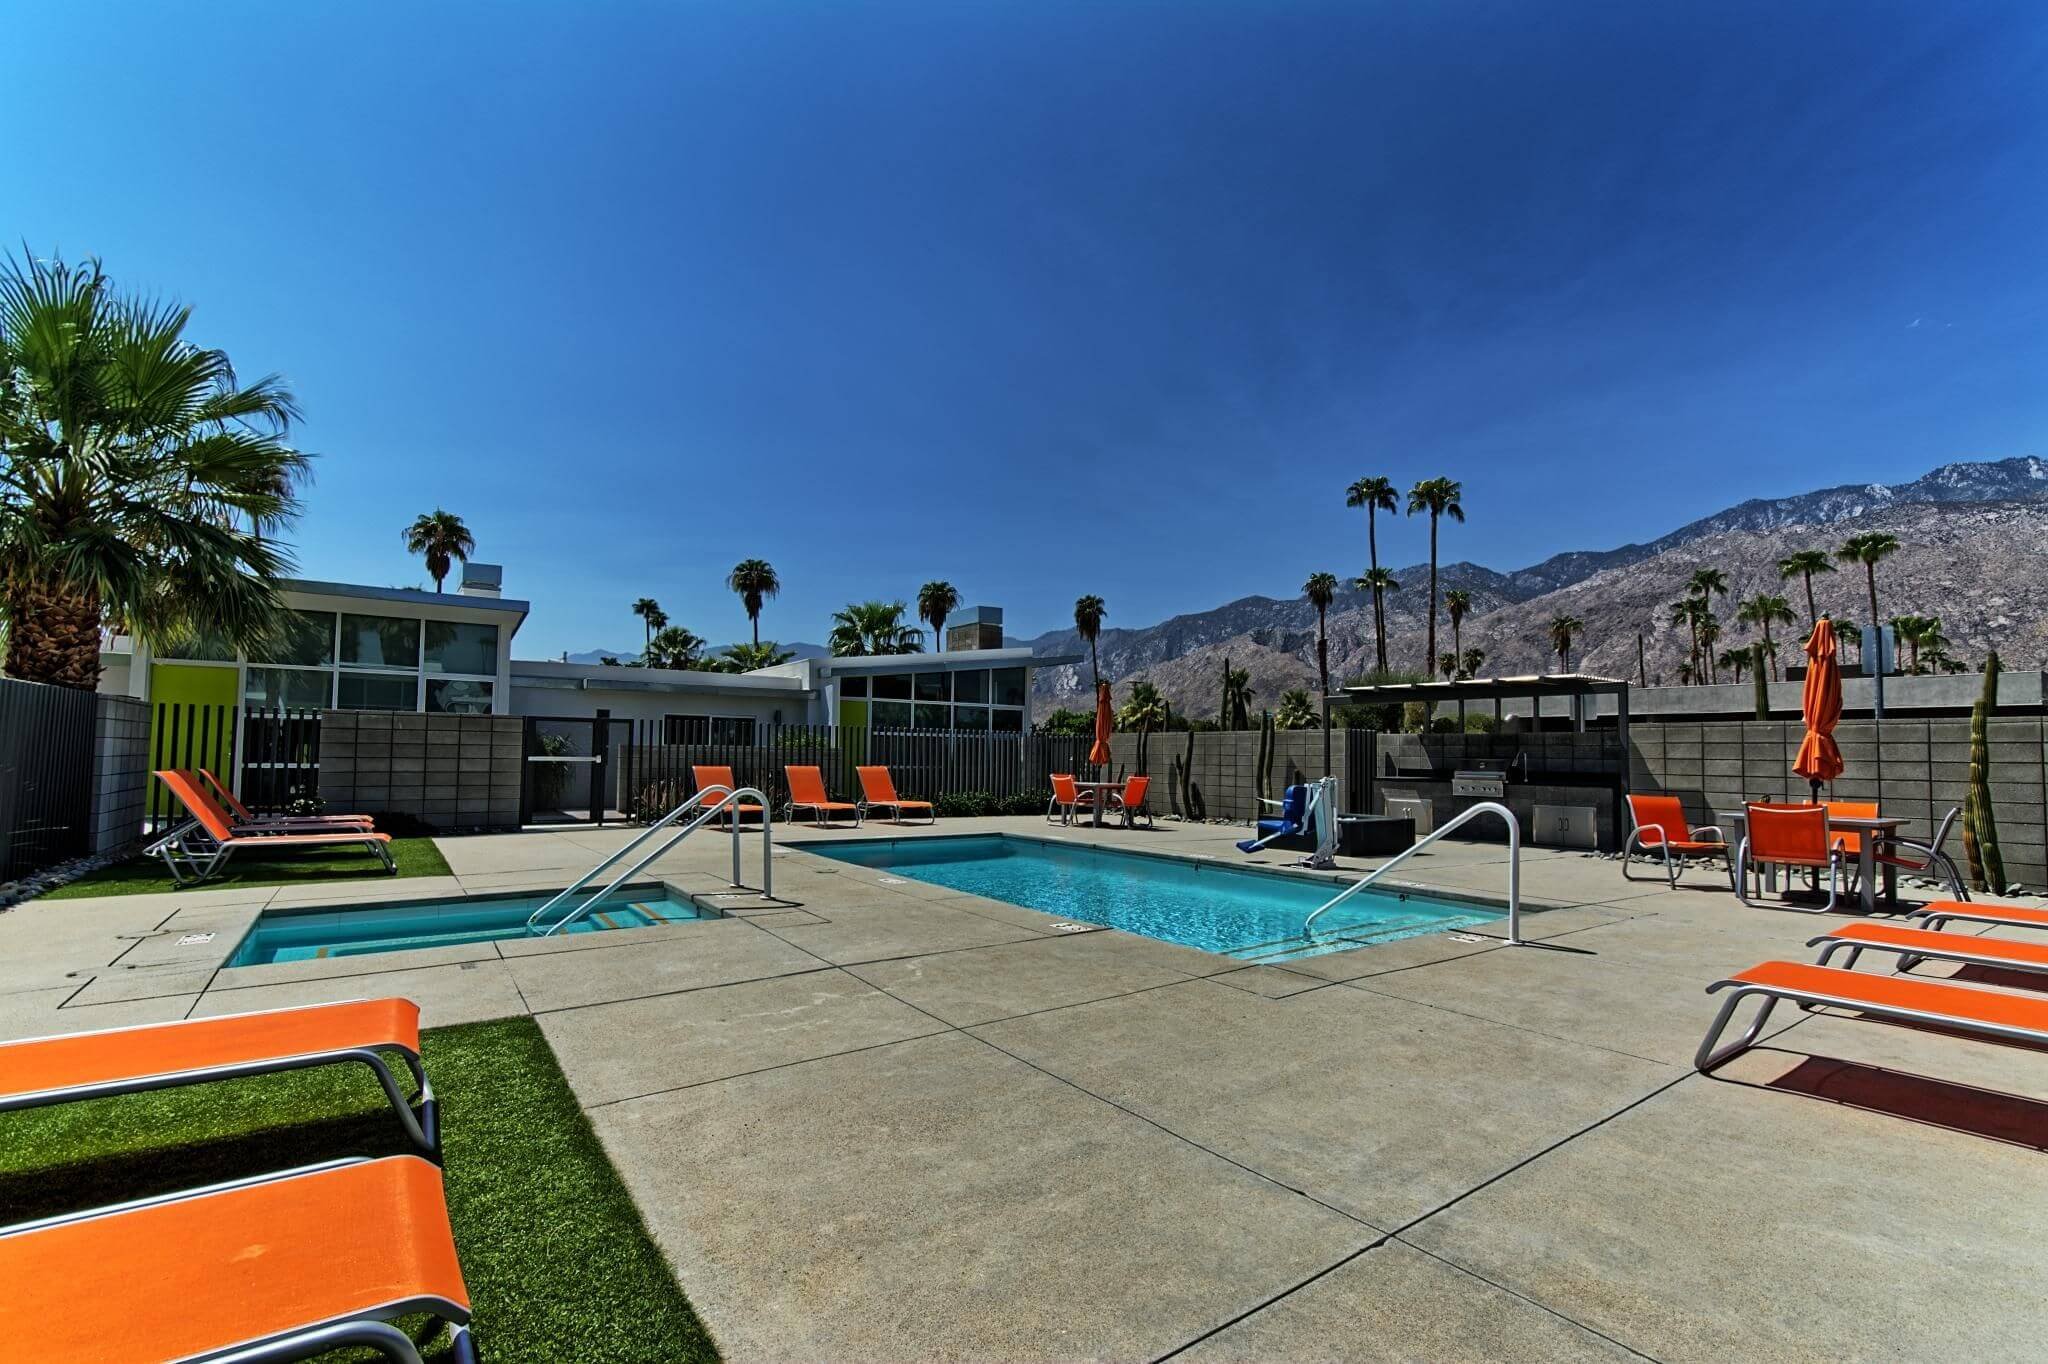 Sophia Palm Springs 92262